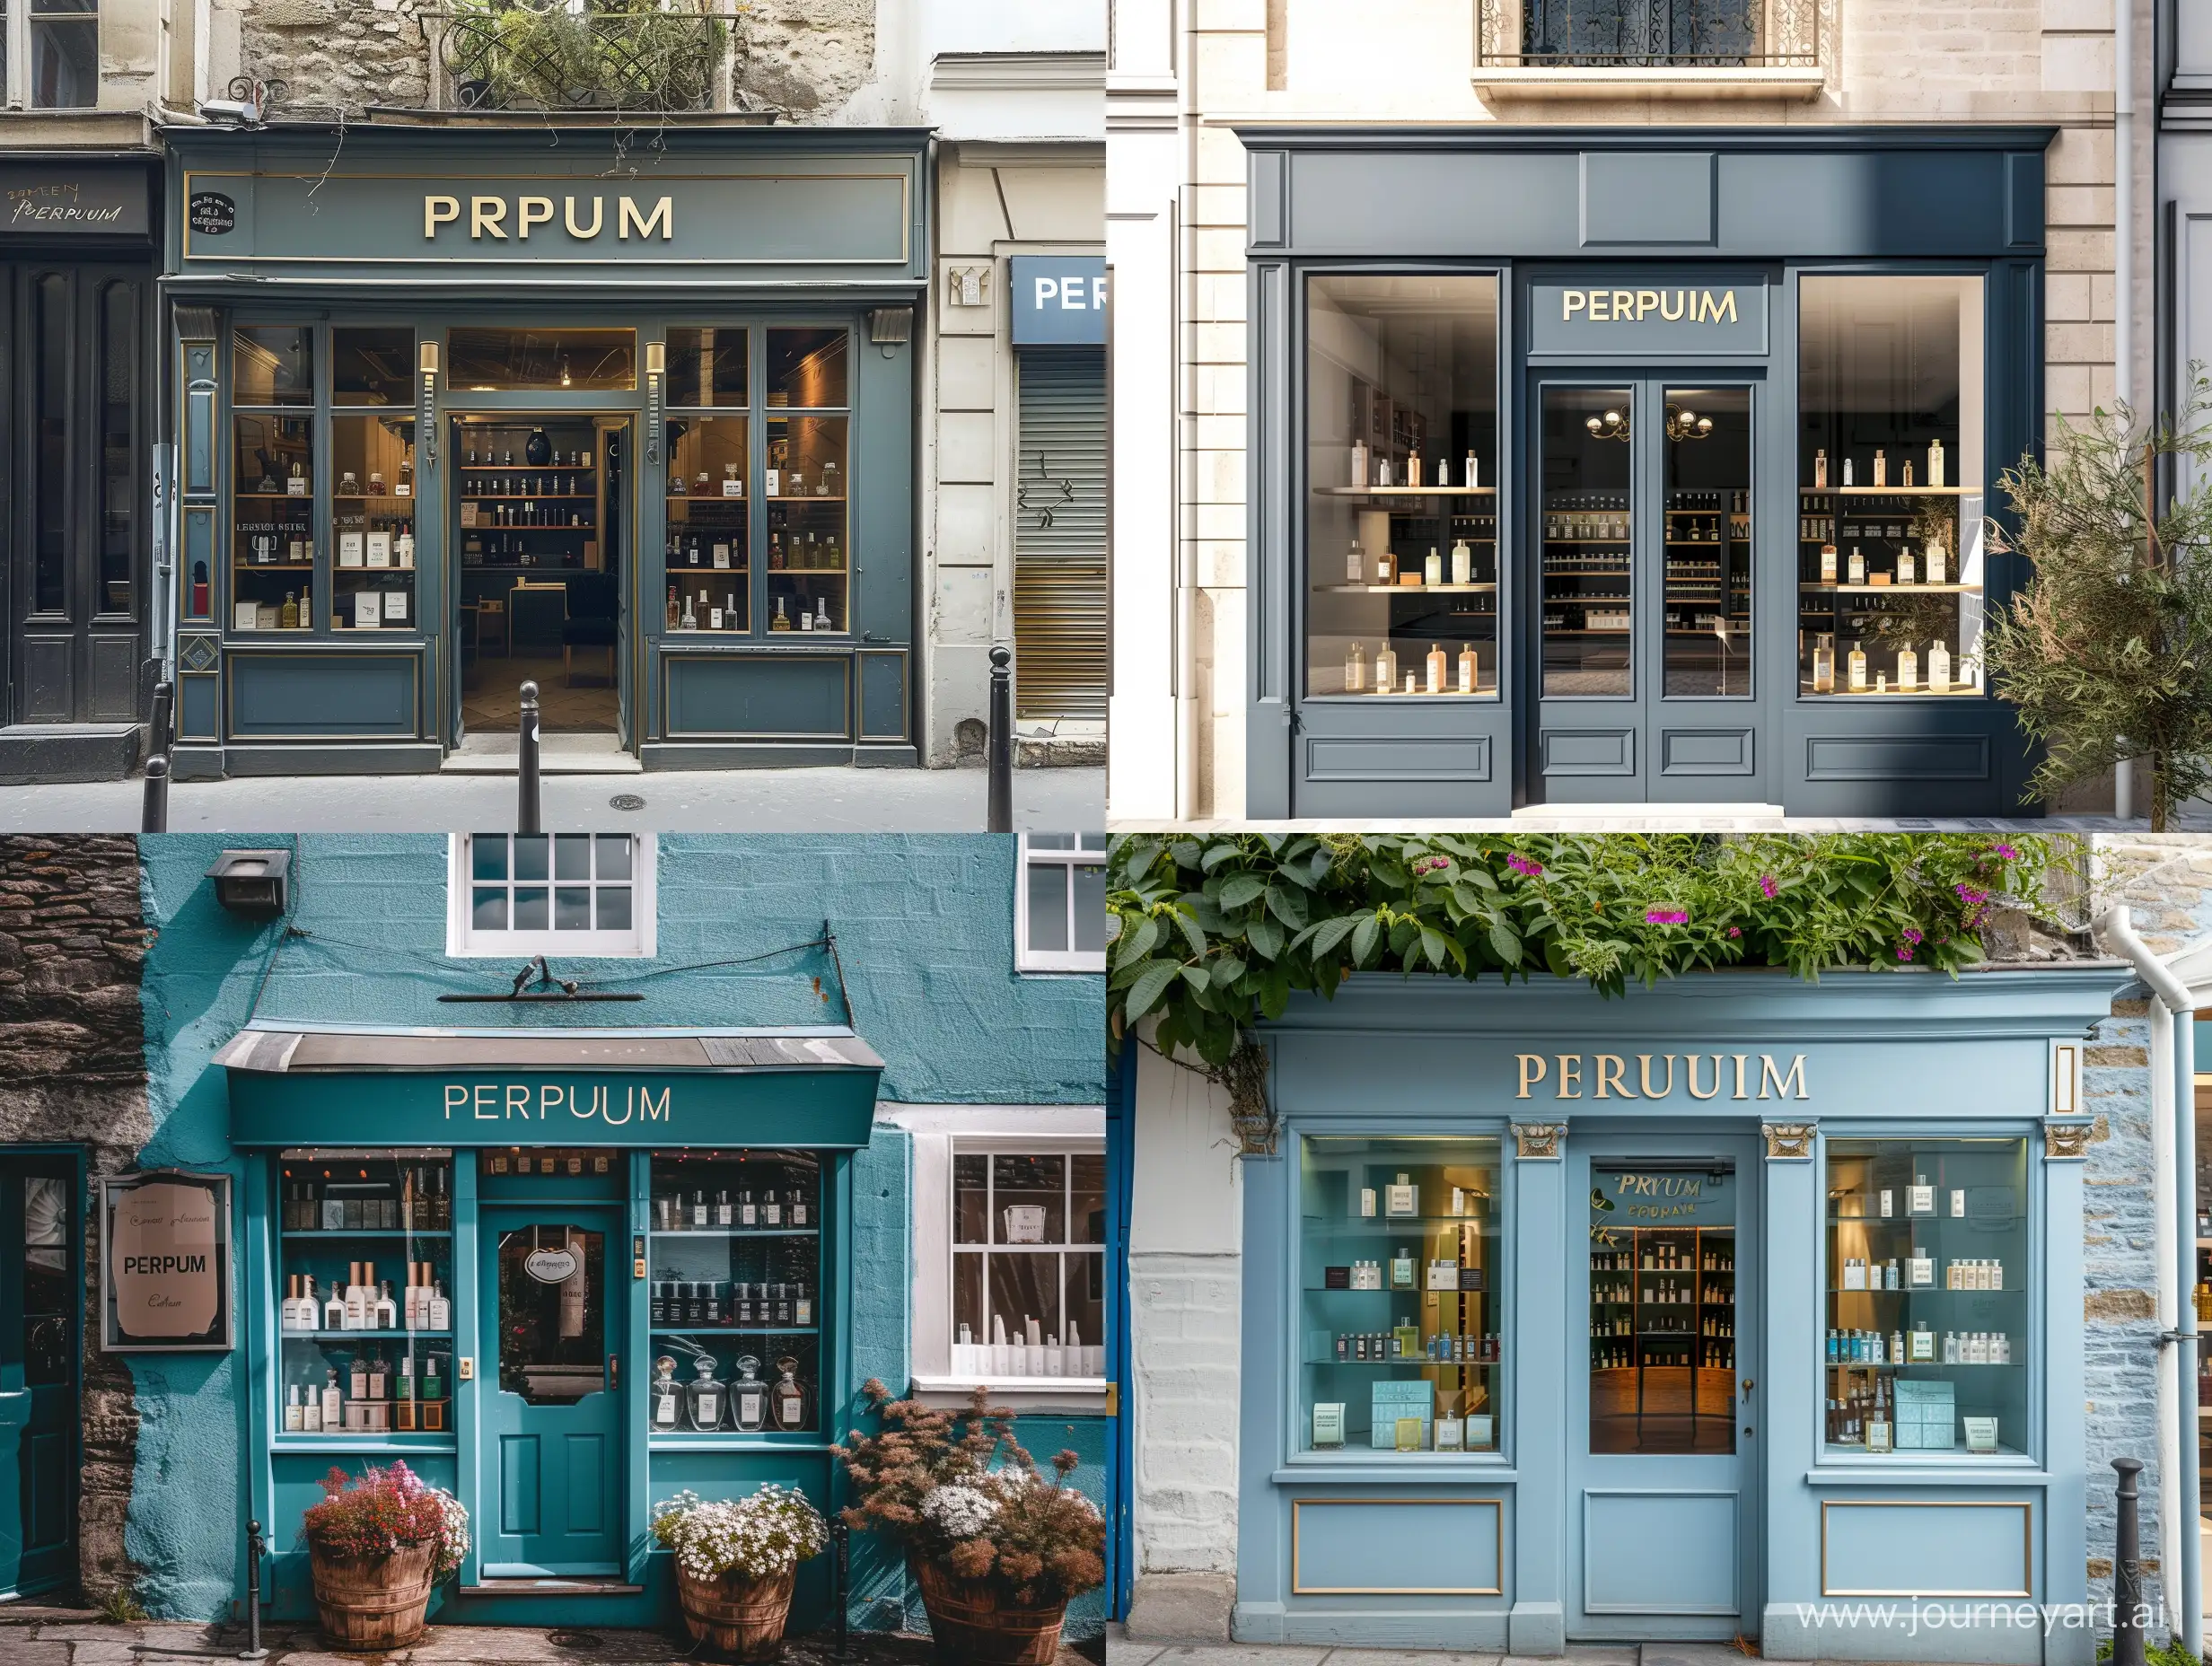 Charming-Perfume-Shop-Exterior-PERFUM-Storefront-Display